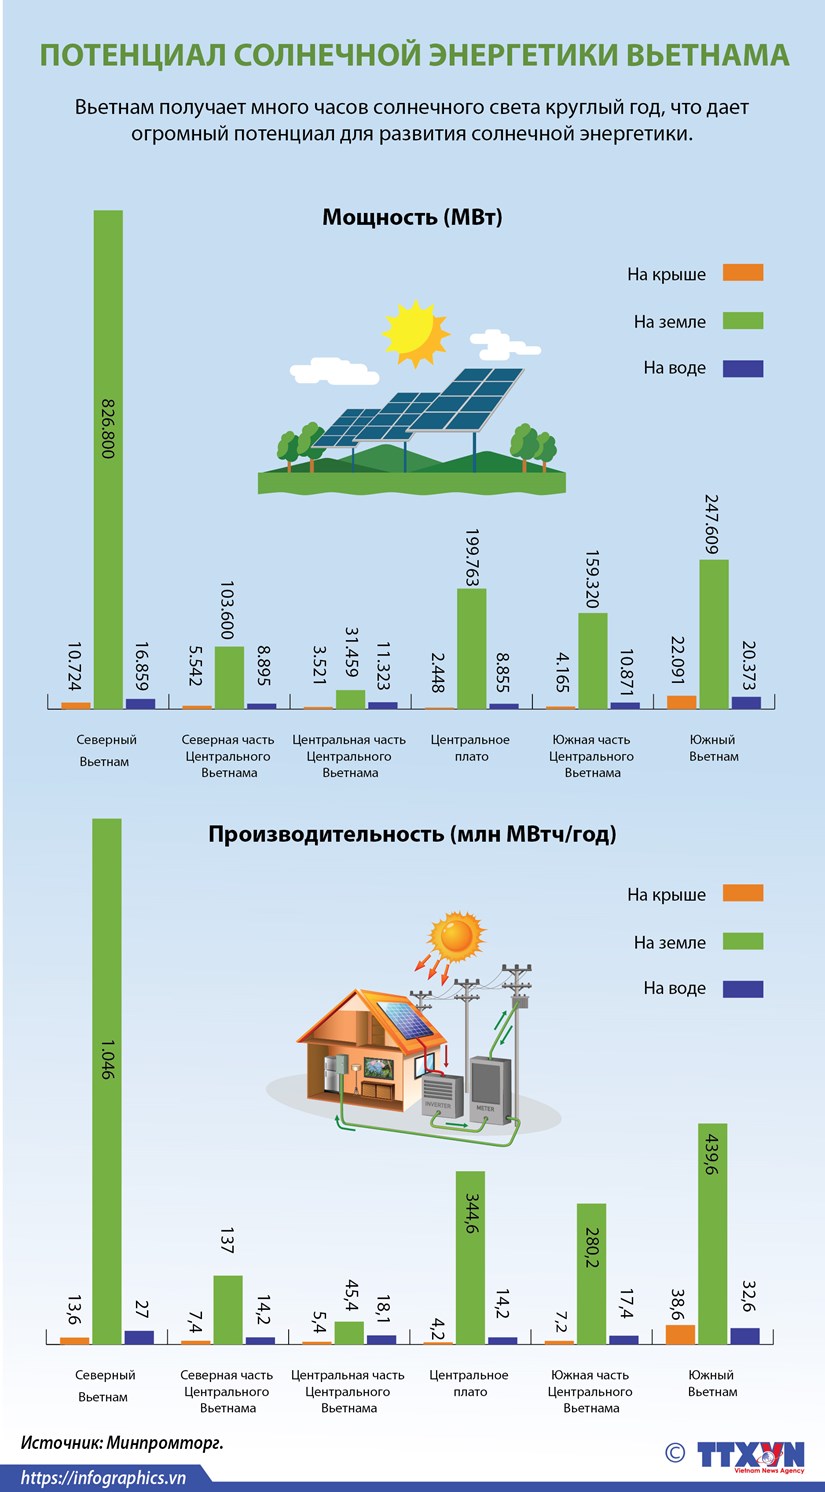 Потенциал солнечнои энергетики Вьетнама hinh anh 1